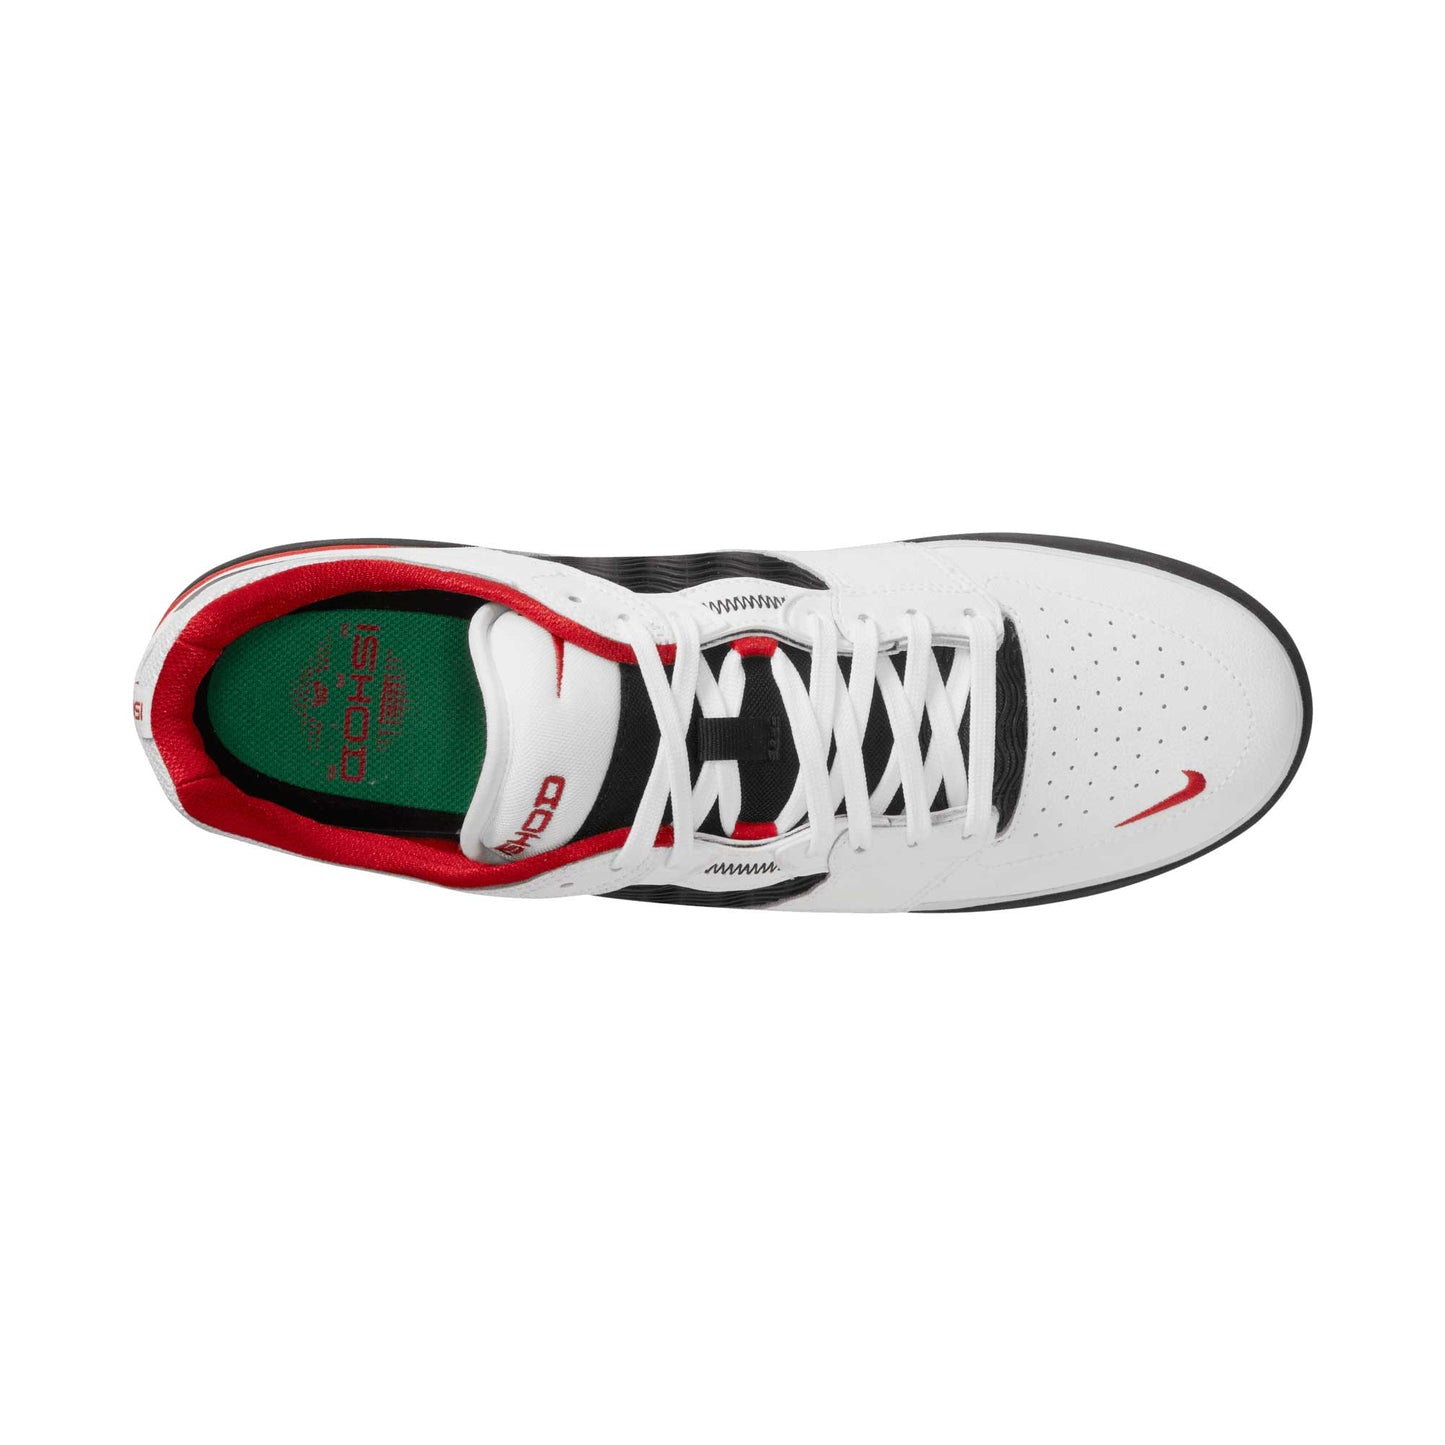 Nike SB Ishod Wair Premium white/black-university red-black, white/black-university red-black - Tiki Room Skateboards - 7